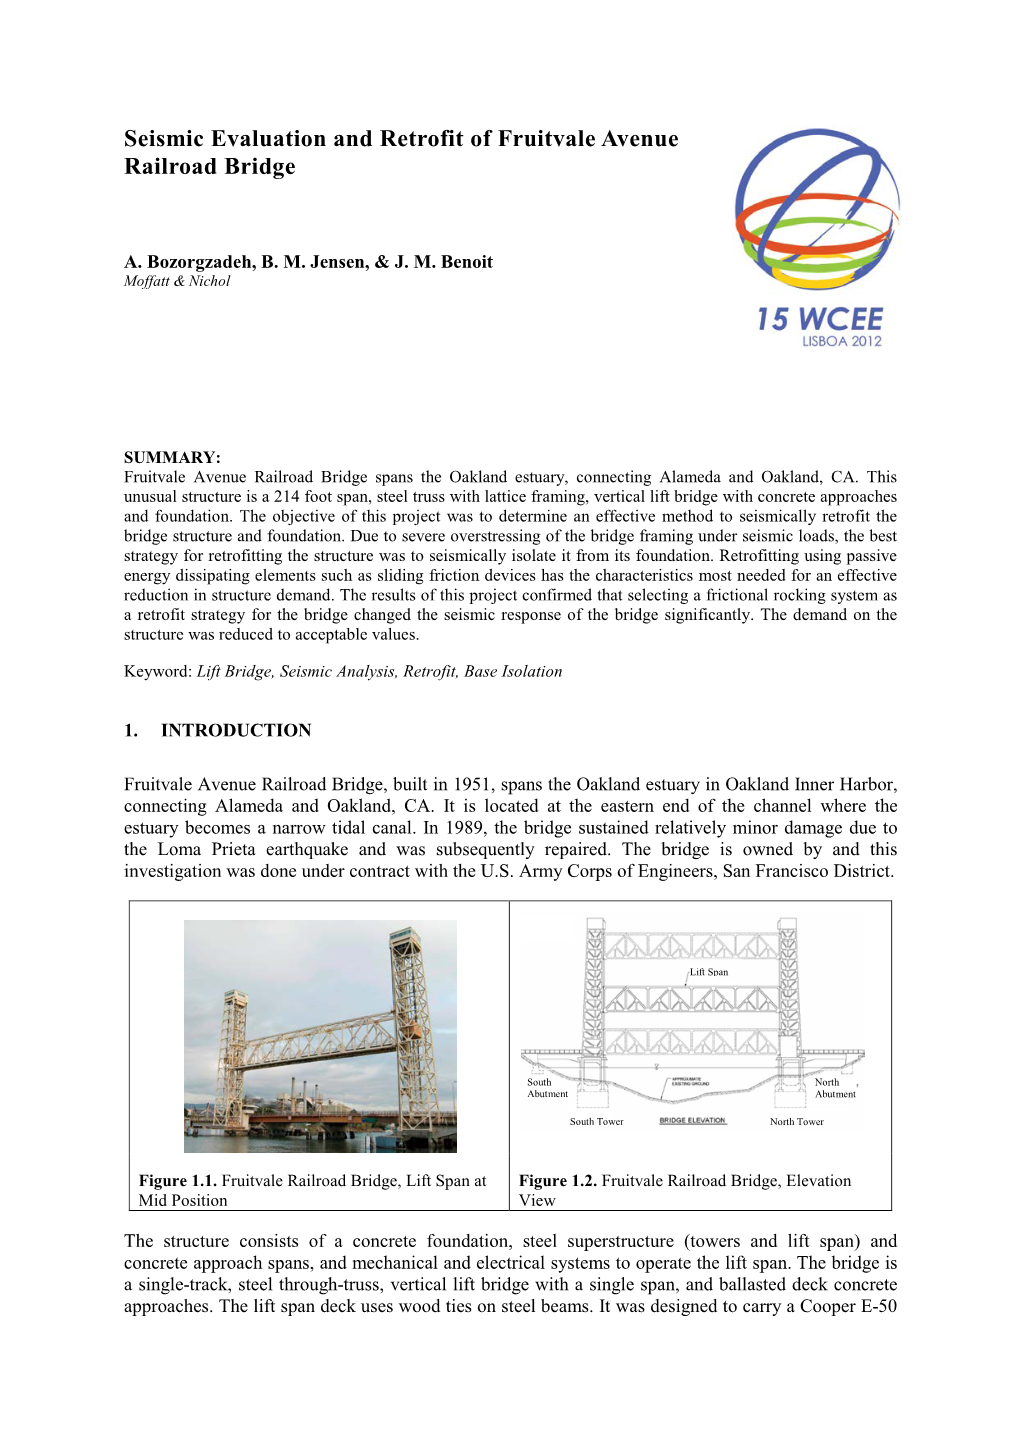 Seismic Evaluation and Retrofit of Fruitvale Avenue Railroad Bridge